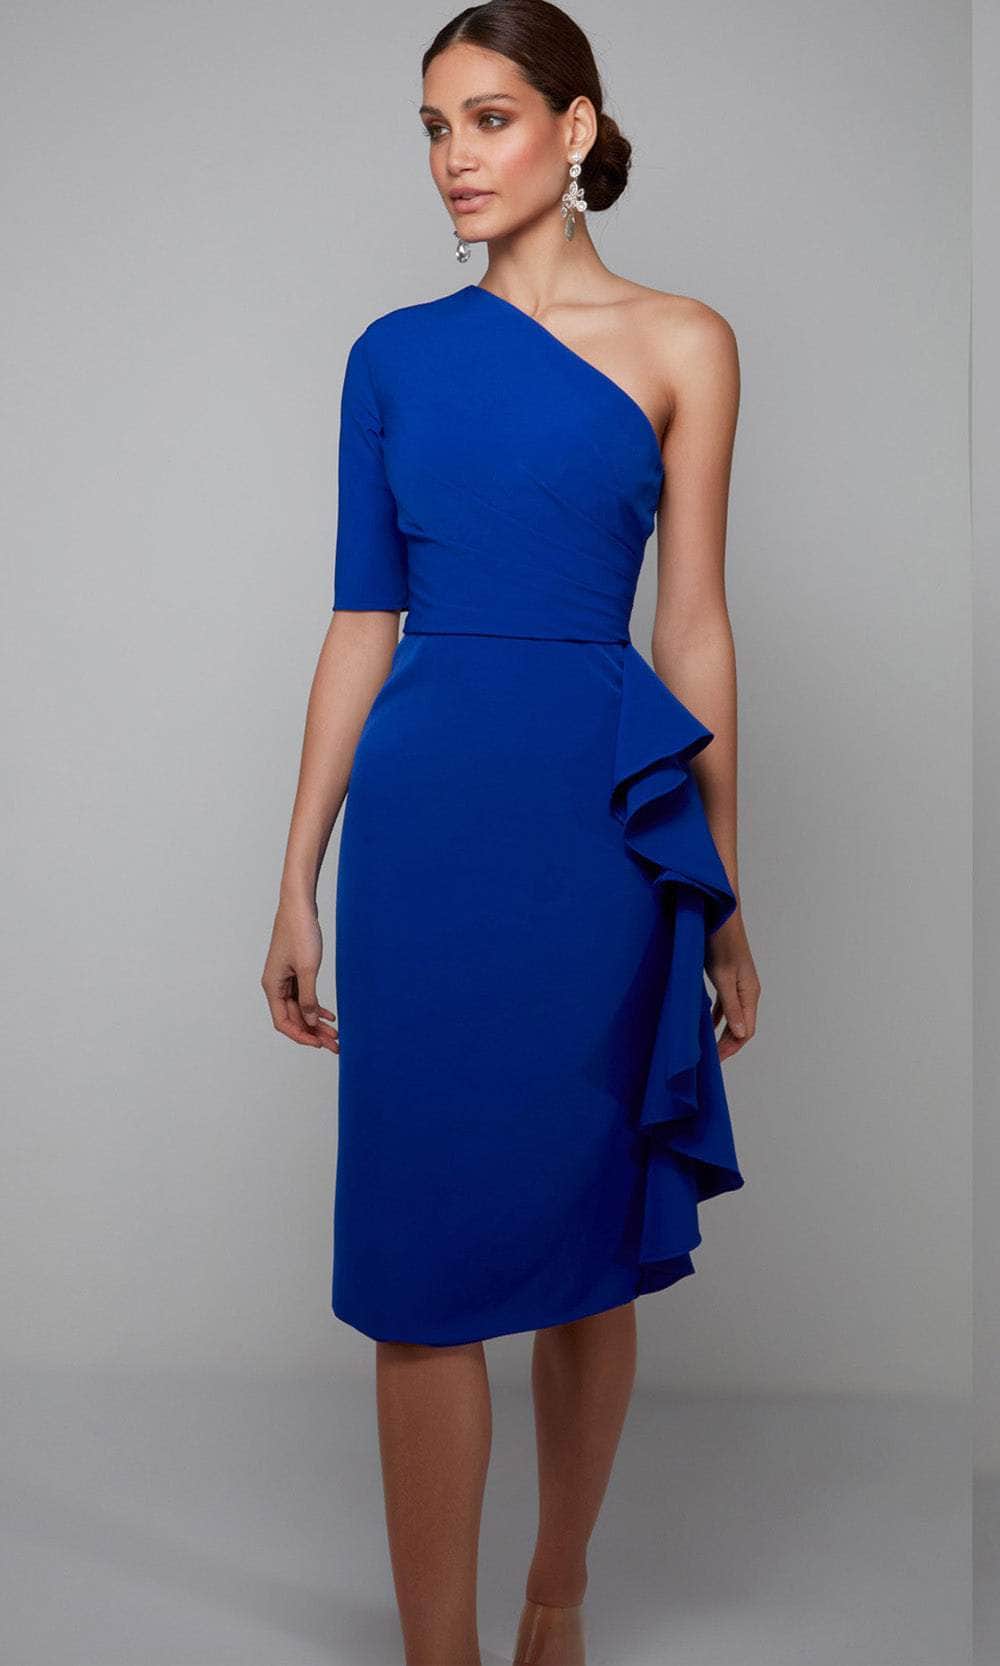 Alyce Paris 70006 - One-Shoulder Sleeve Formal Dress
